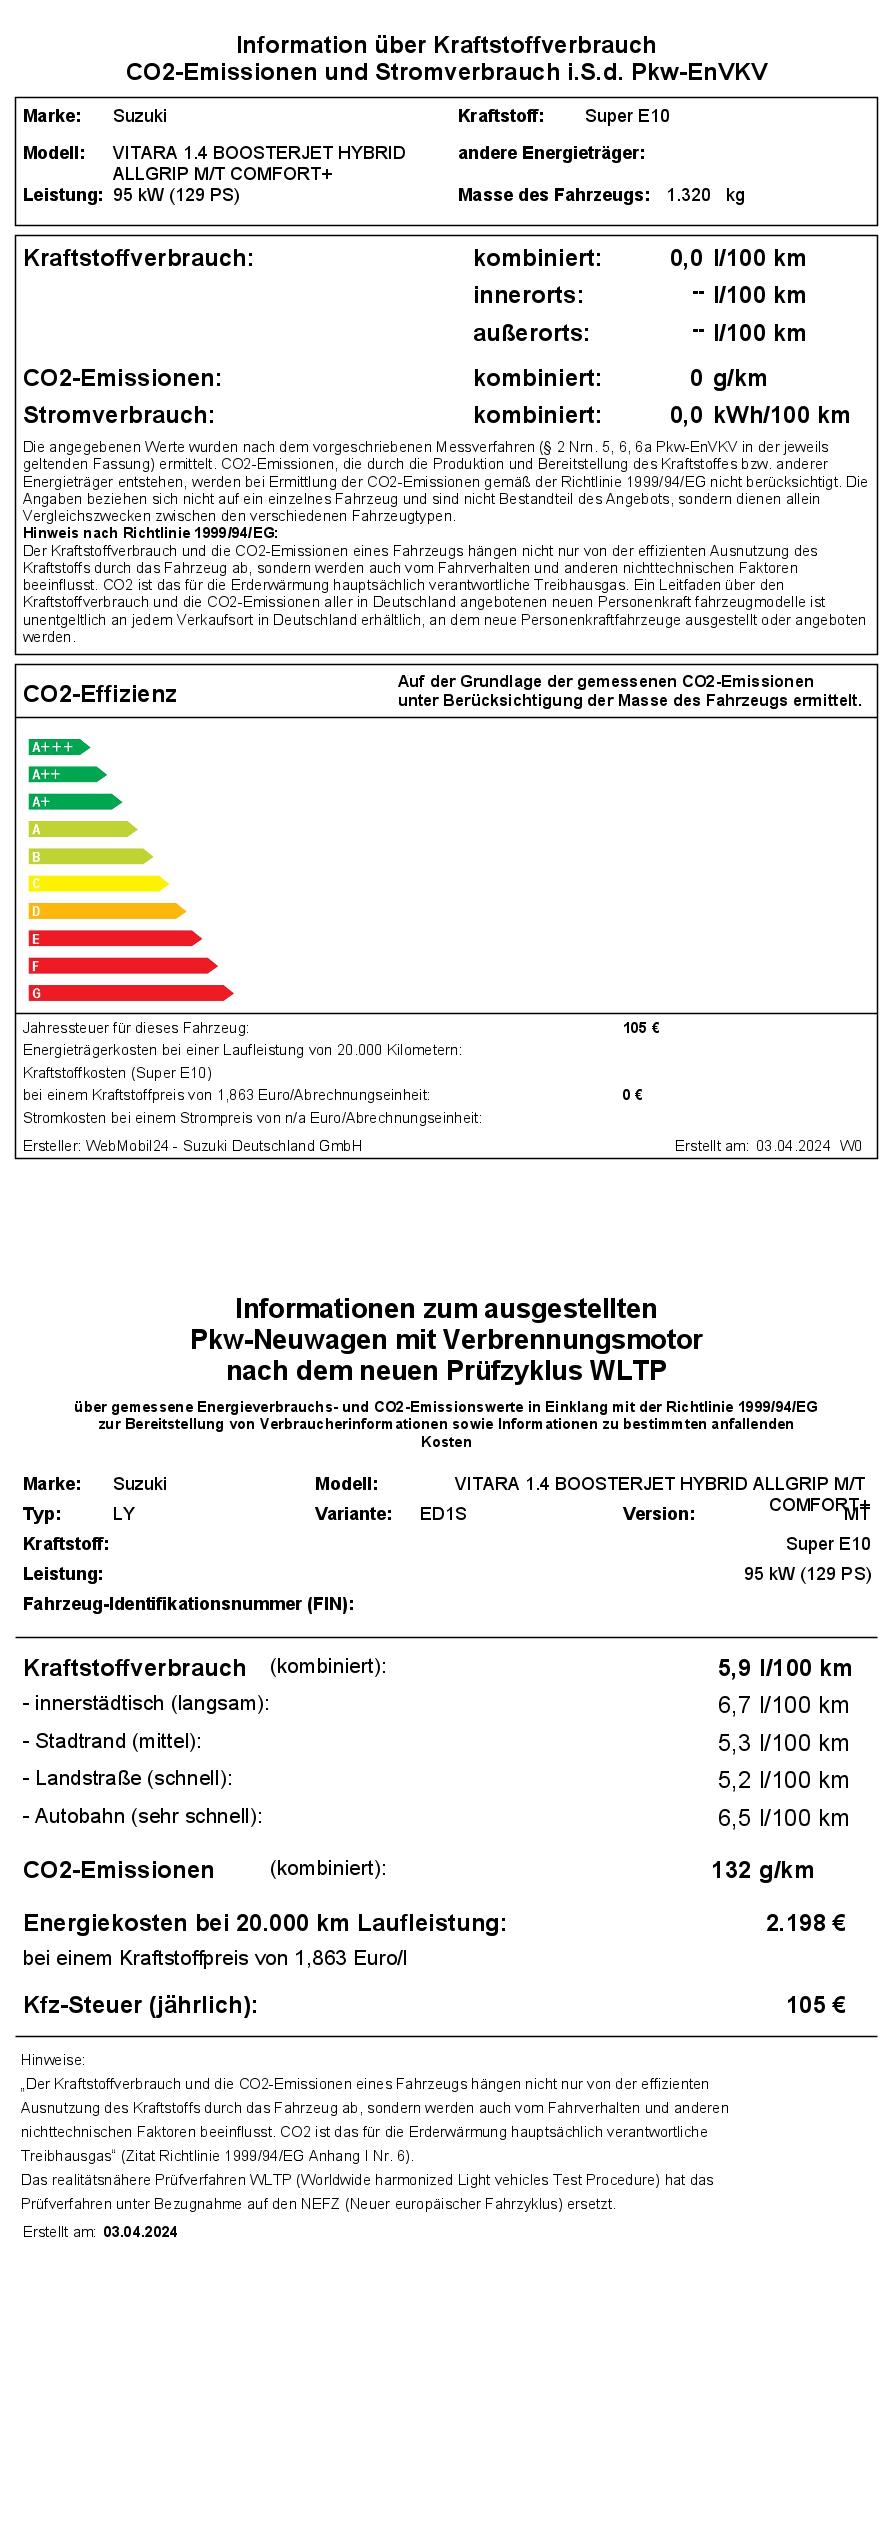 Vitara 5-Türer - 1.4 BOOSTERJET HYBRID ALLGRIP - Comfort+ Energie Label (Bild)